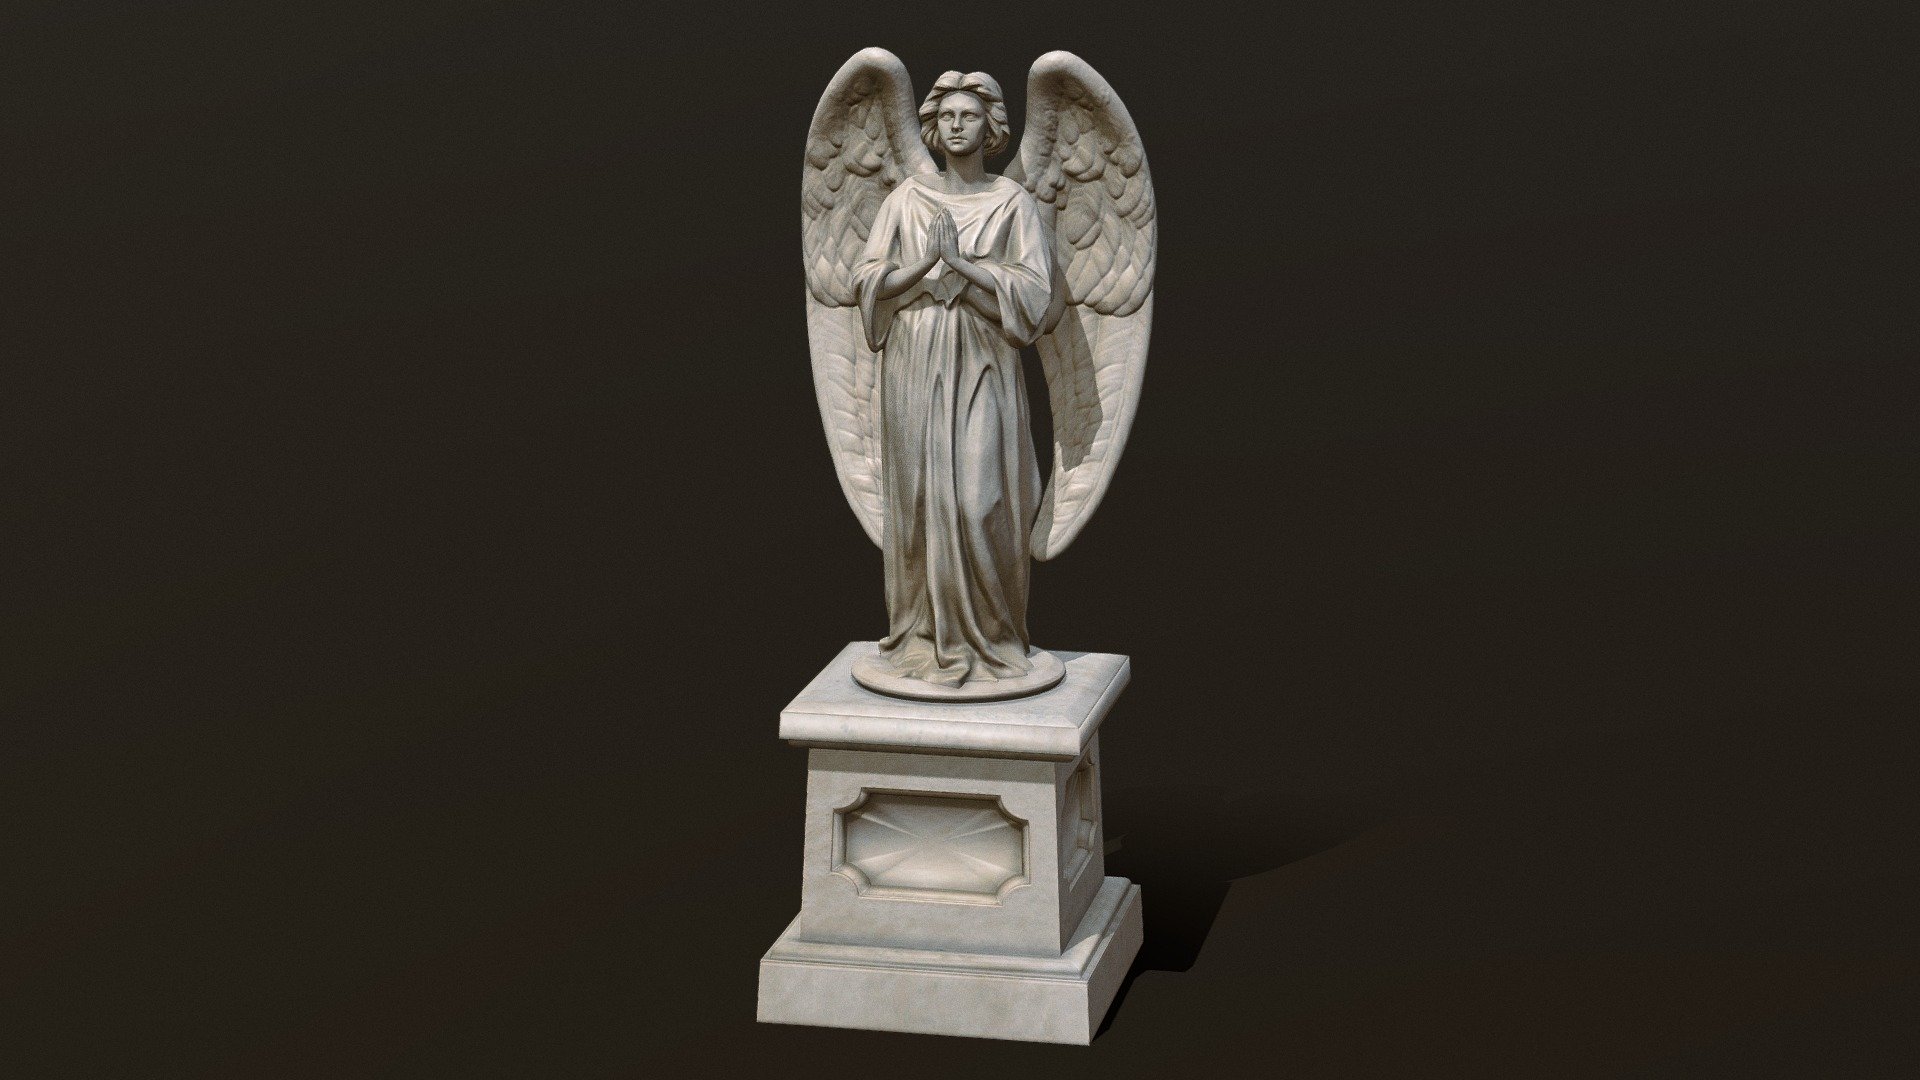 Sculpted in Blender. Converted into lowpoly model for games

Added File formats: FBX, OBJ, Blend - Angel Statue - Buy Royalty Free 3D model by Robin Art FX (@robinsonartfx) 3d model